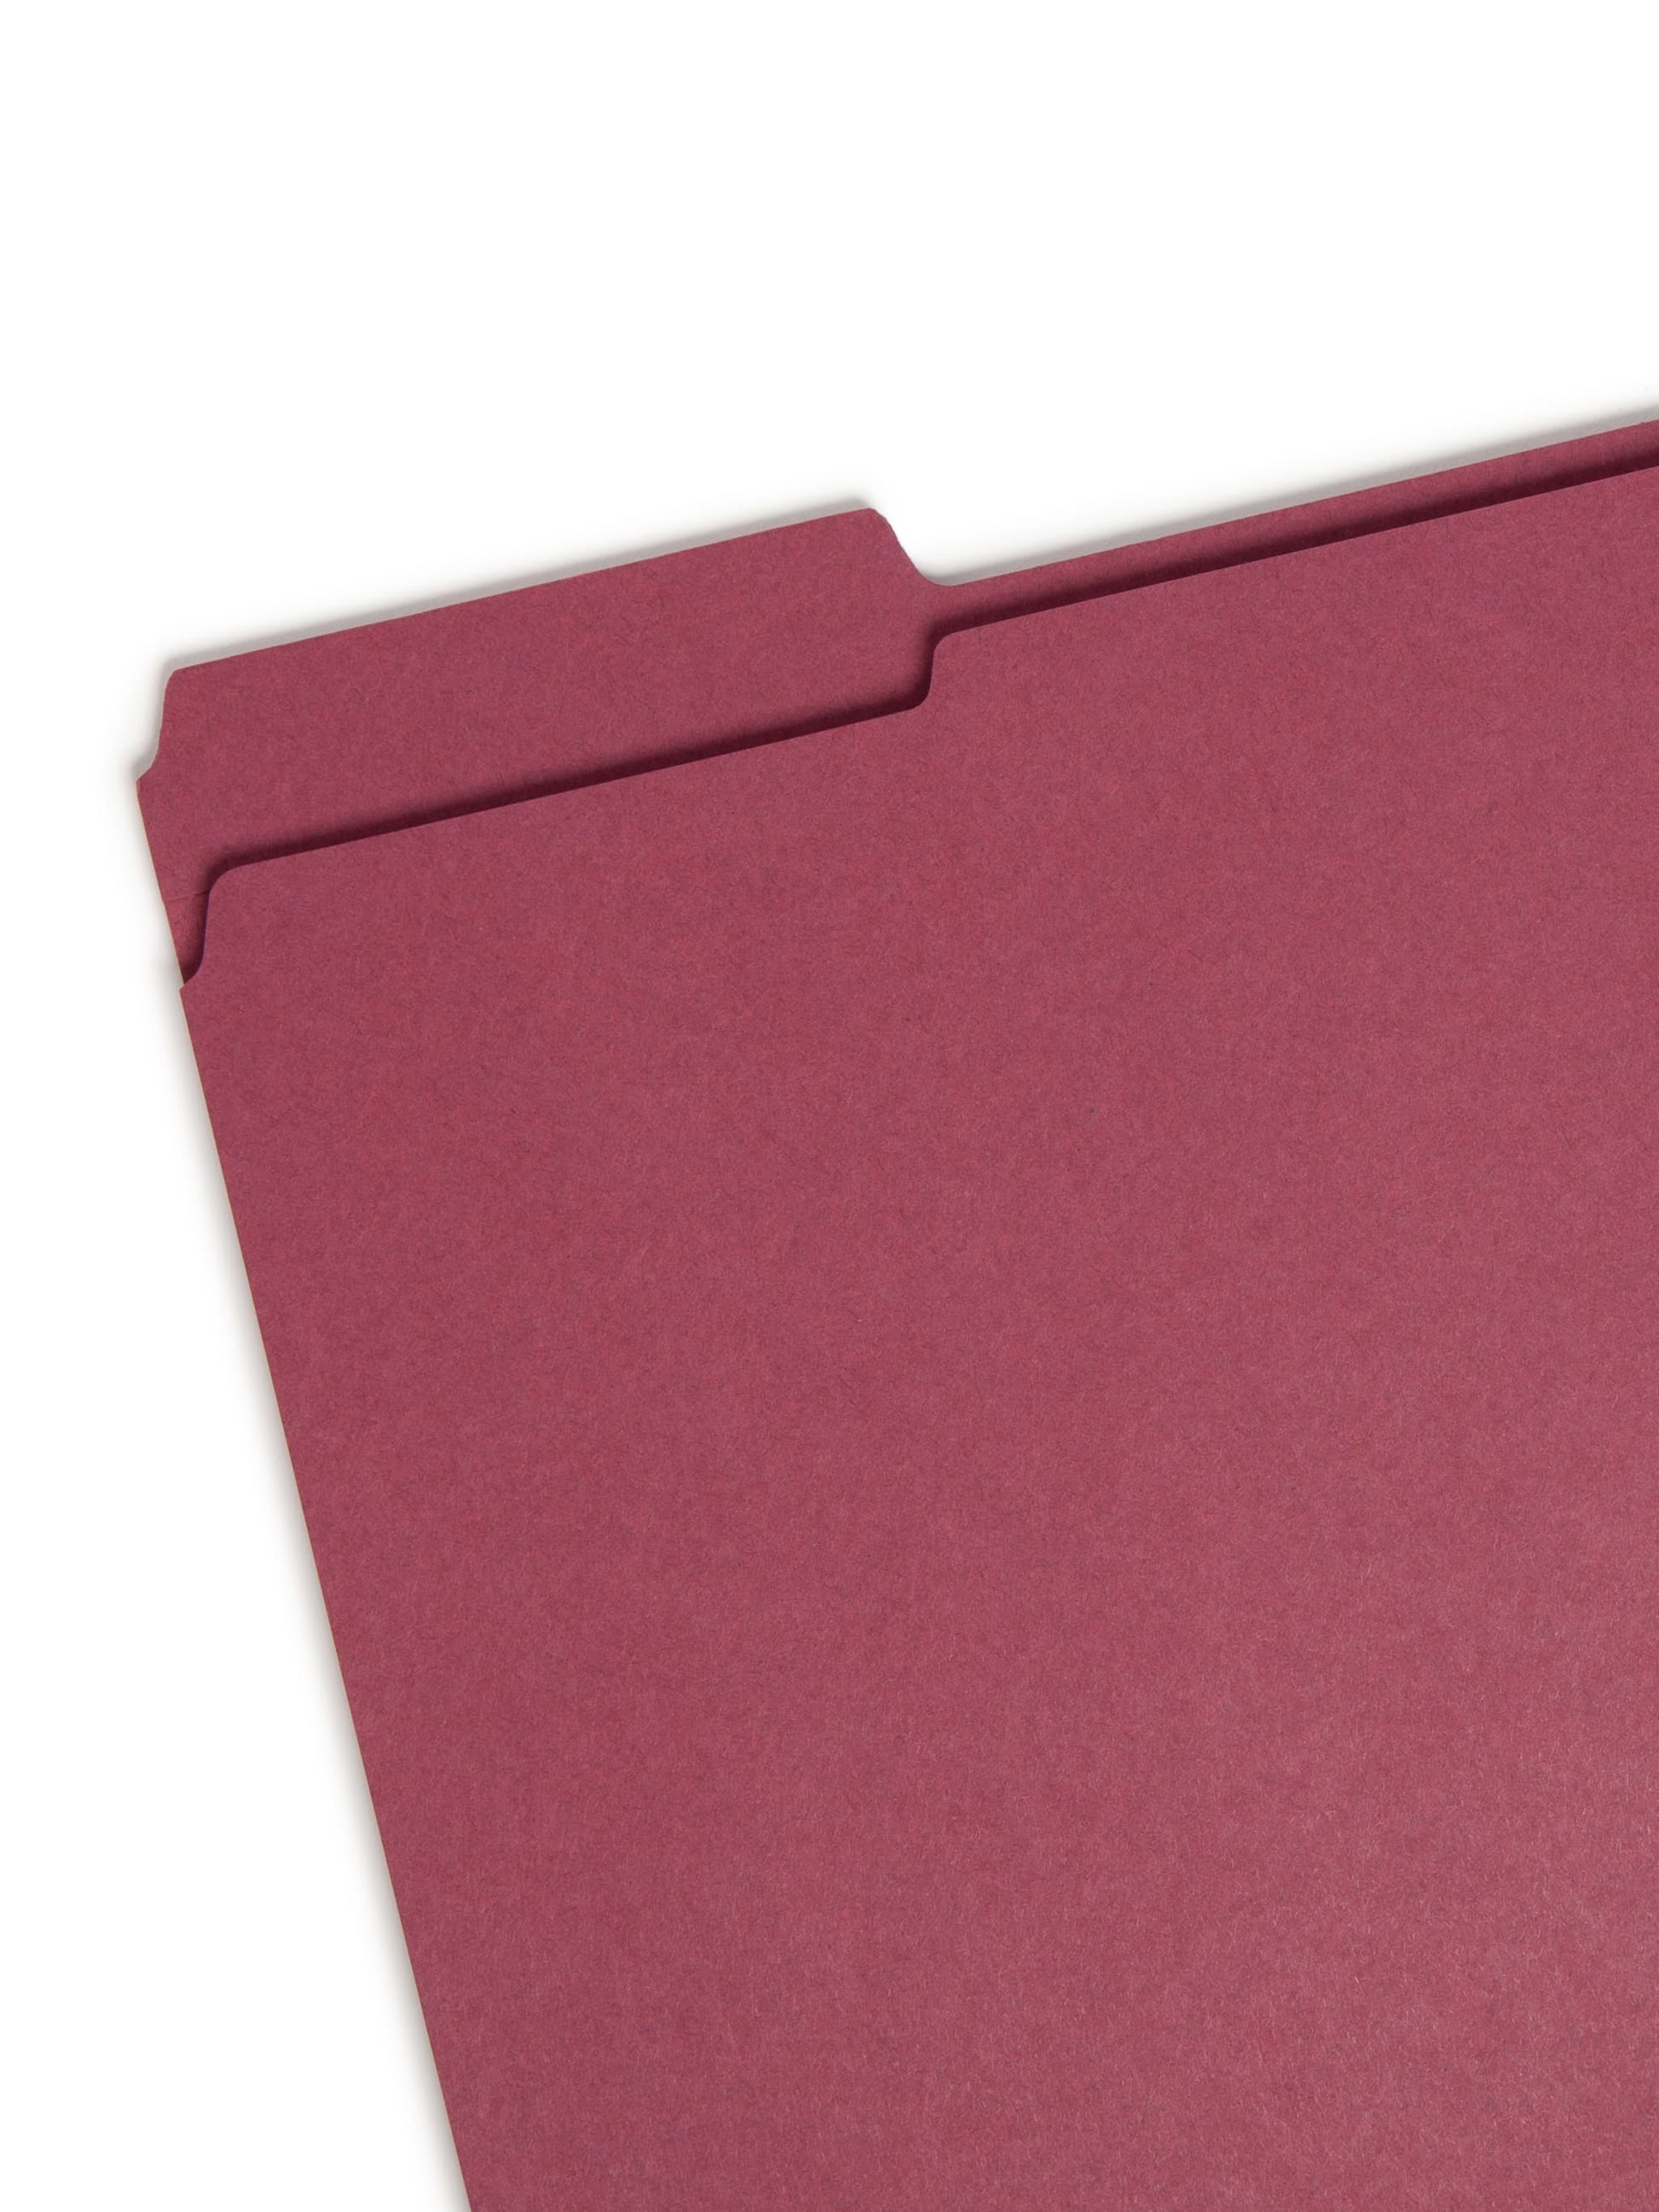 Reinforced Tab File Folders, 1/3-Cut Tab, Maroon Color, Letter Size, Set of 100, 086486130844